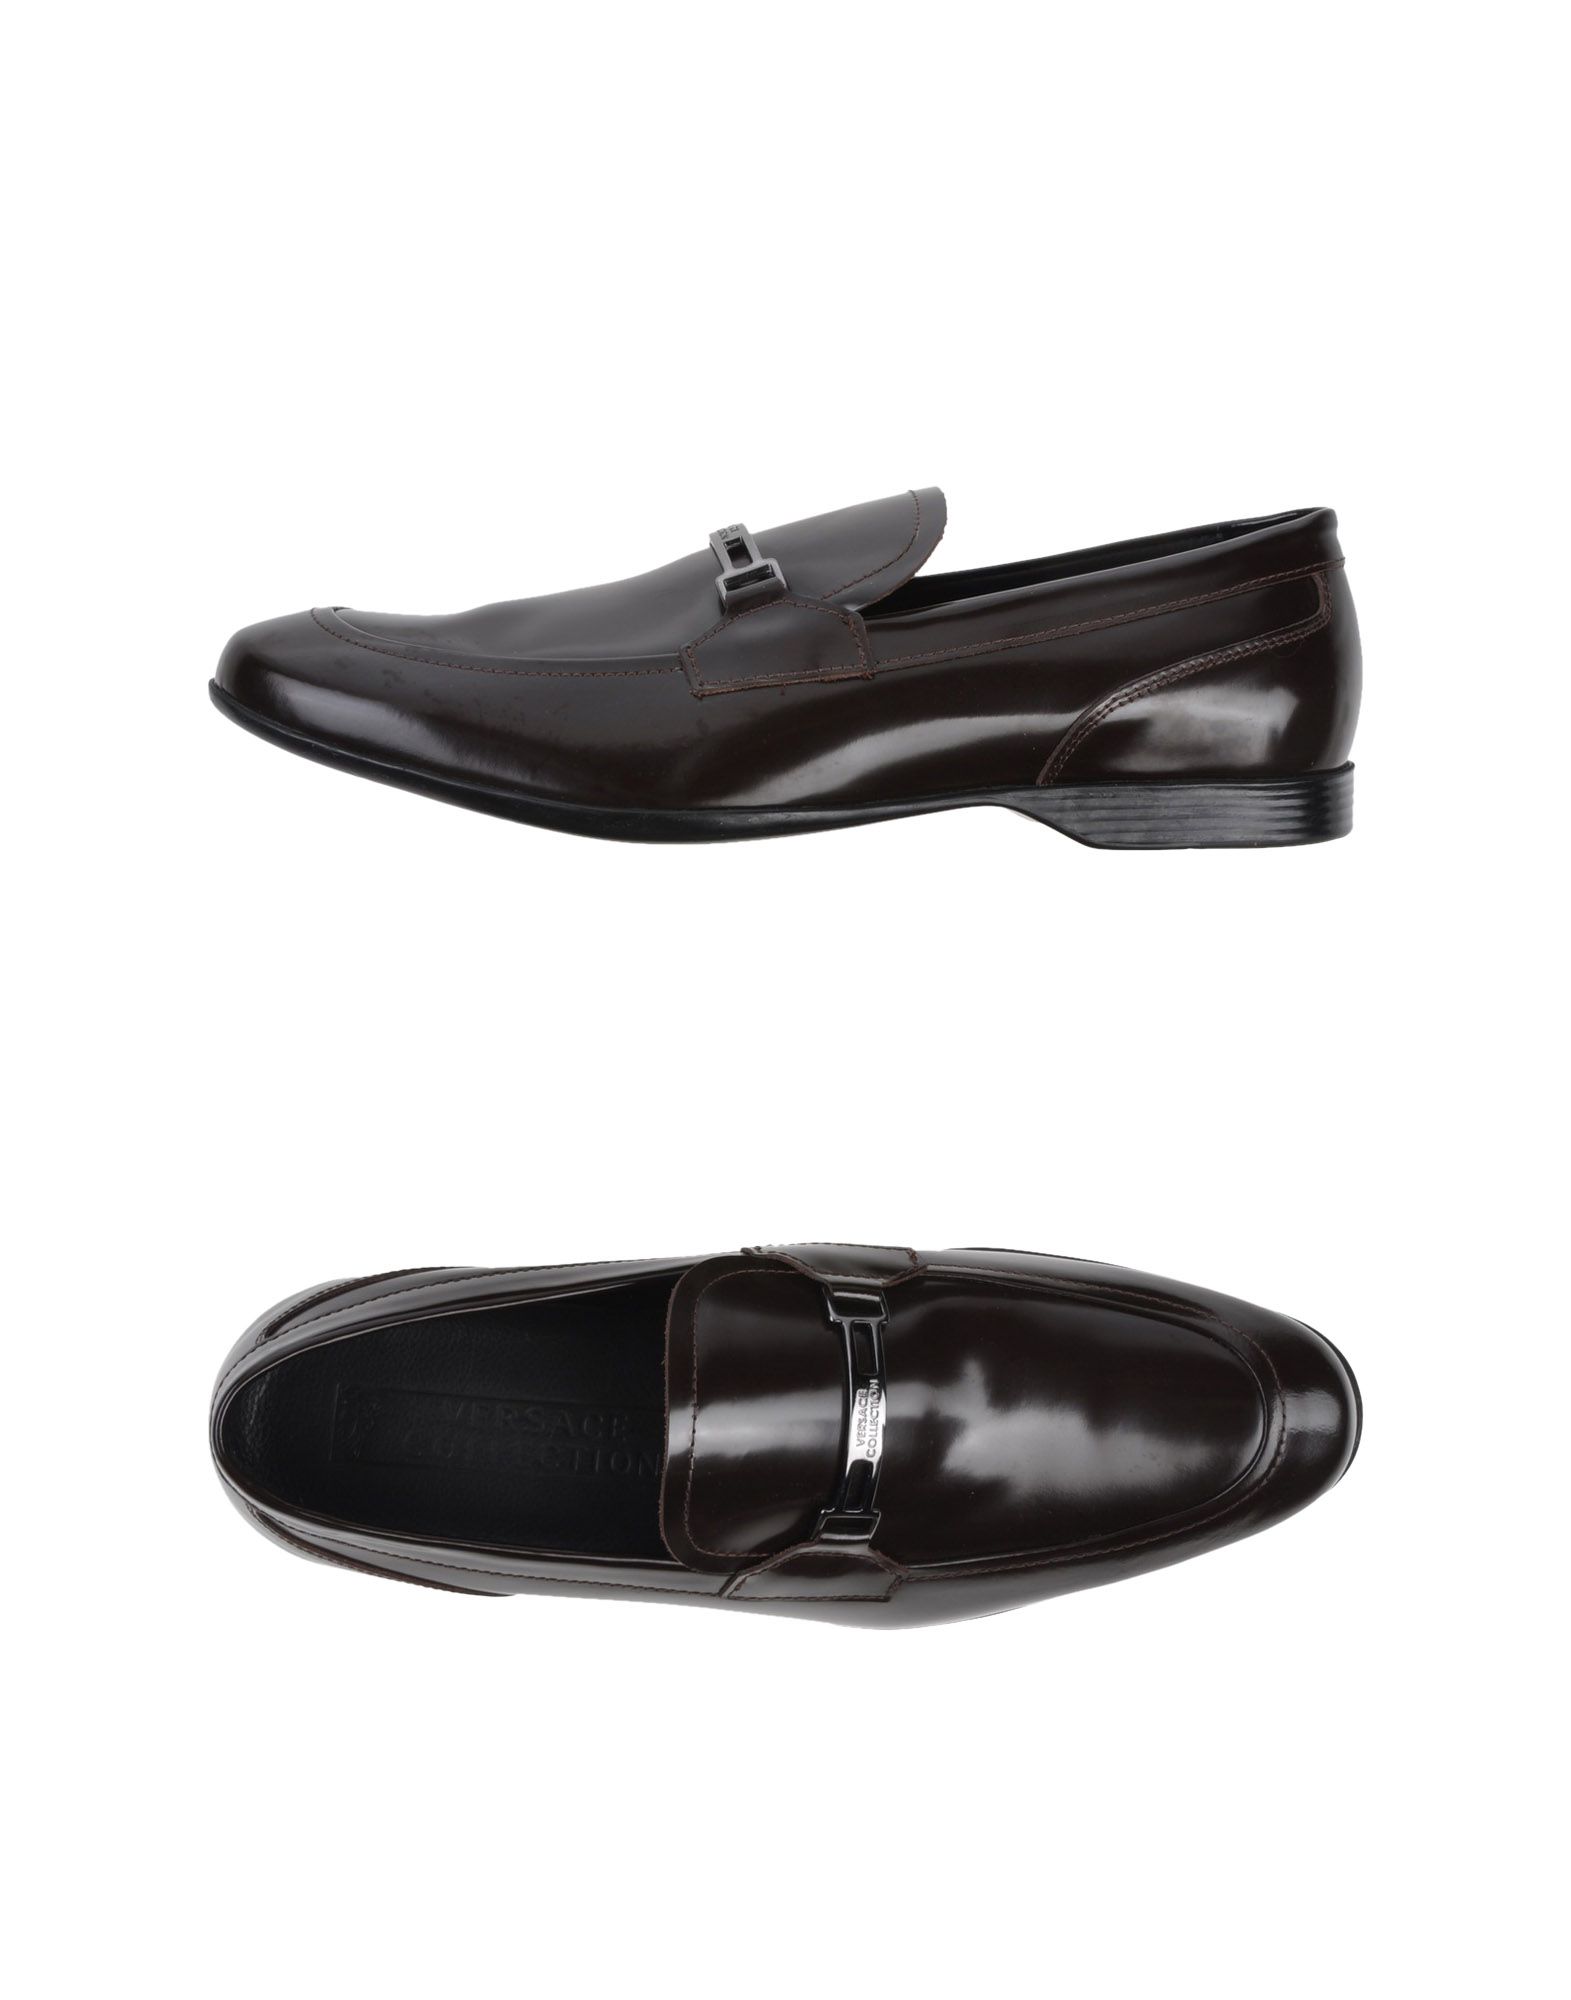 Versace Loafers In Dark Brown